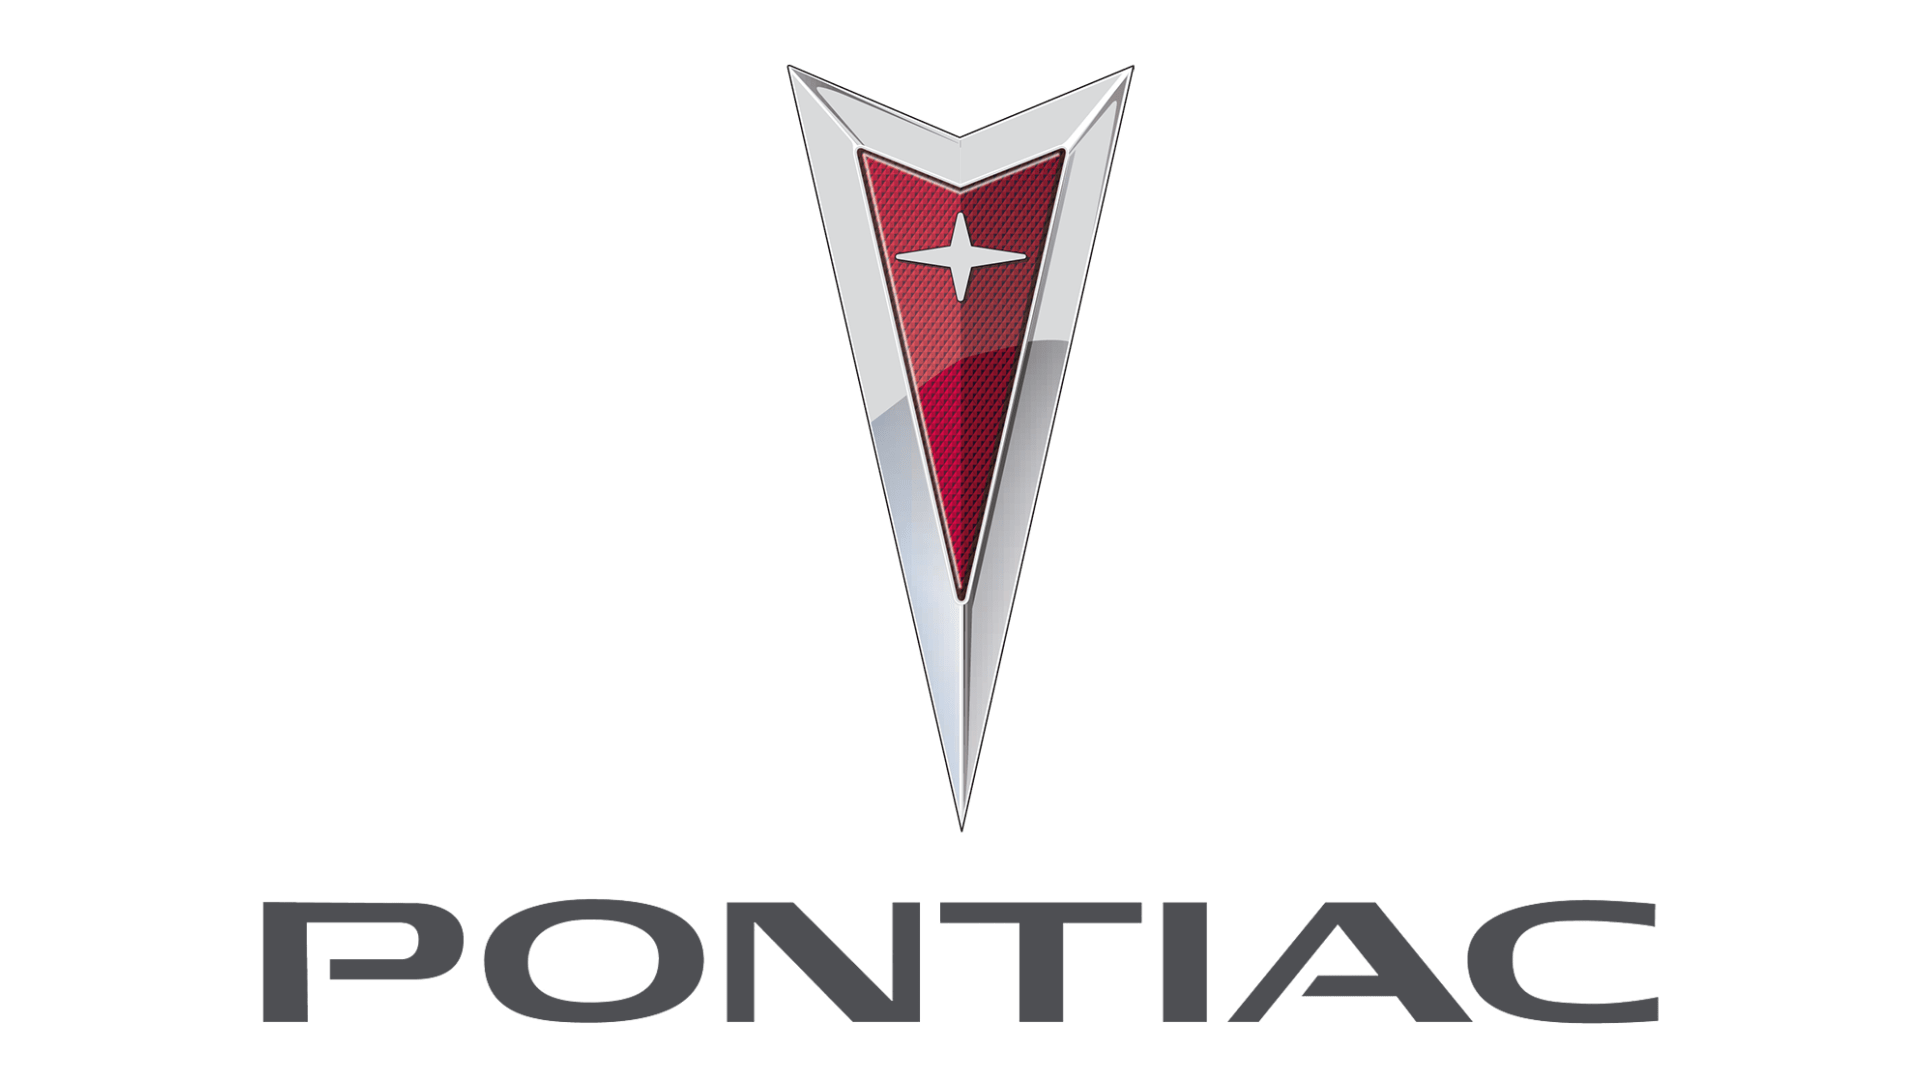 Логотип Pontiac